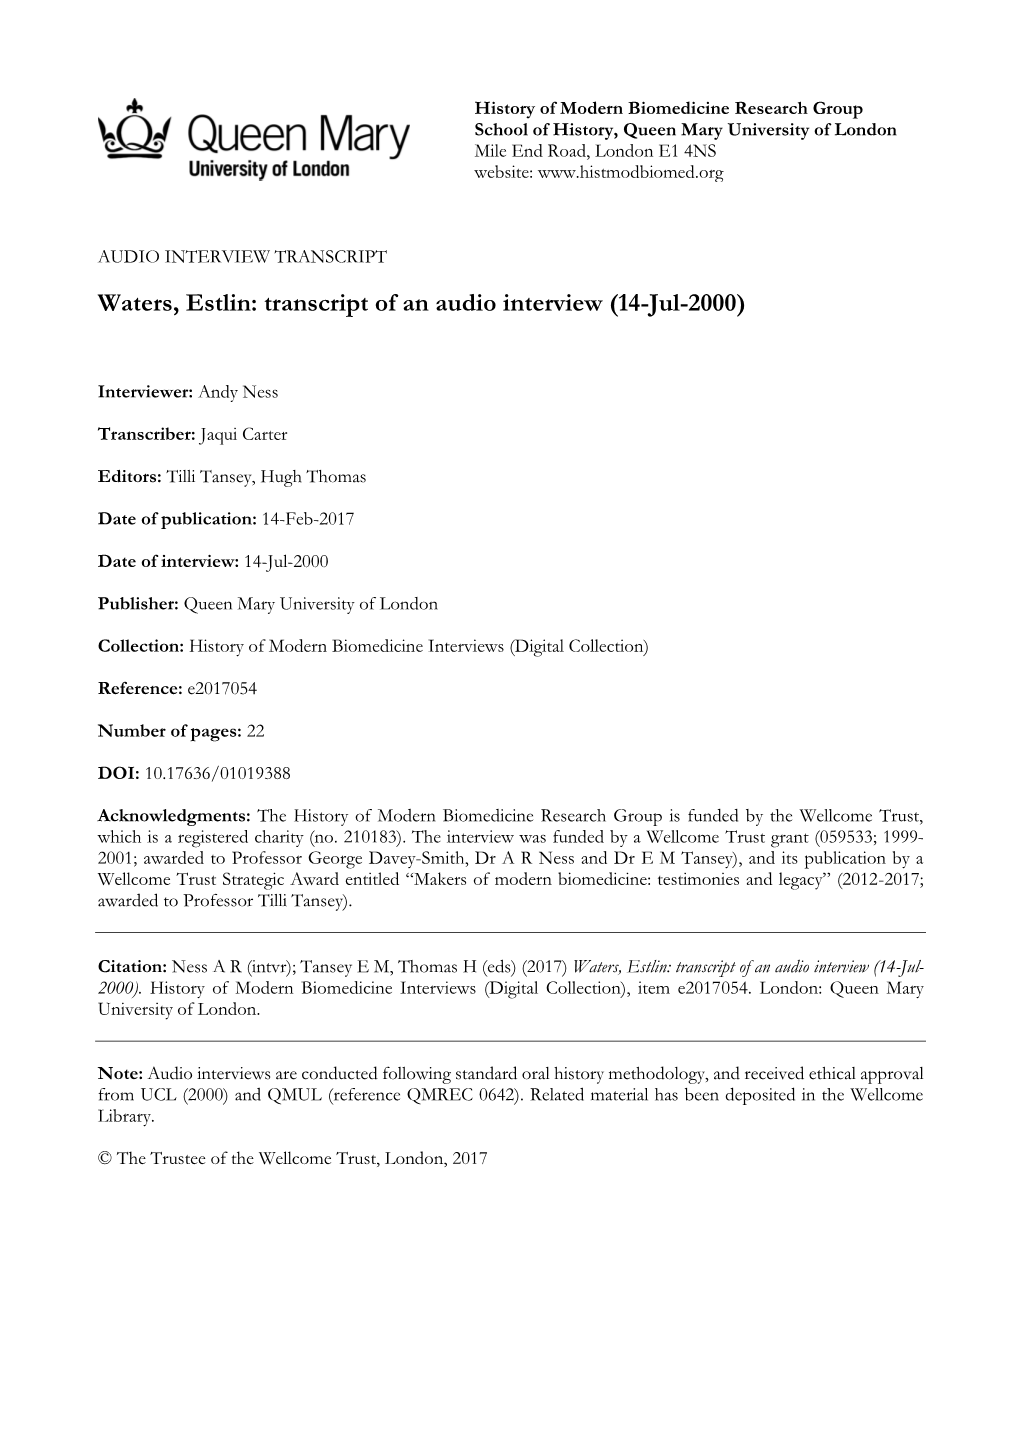 Waters, Estlin: Transcript of an Audio Interview (14-Jul-2000)